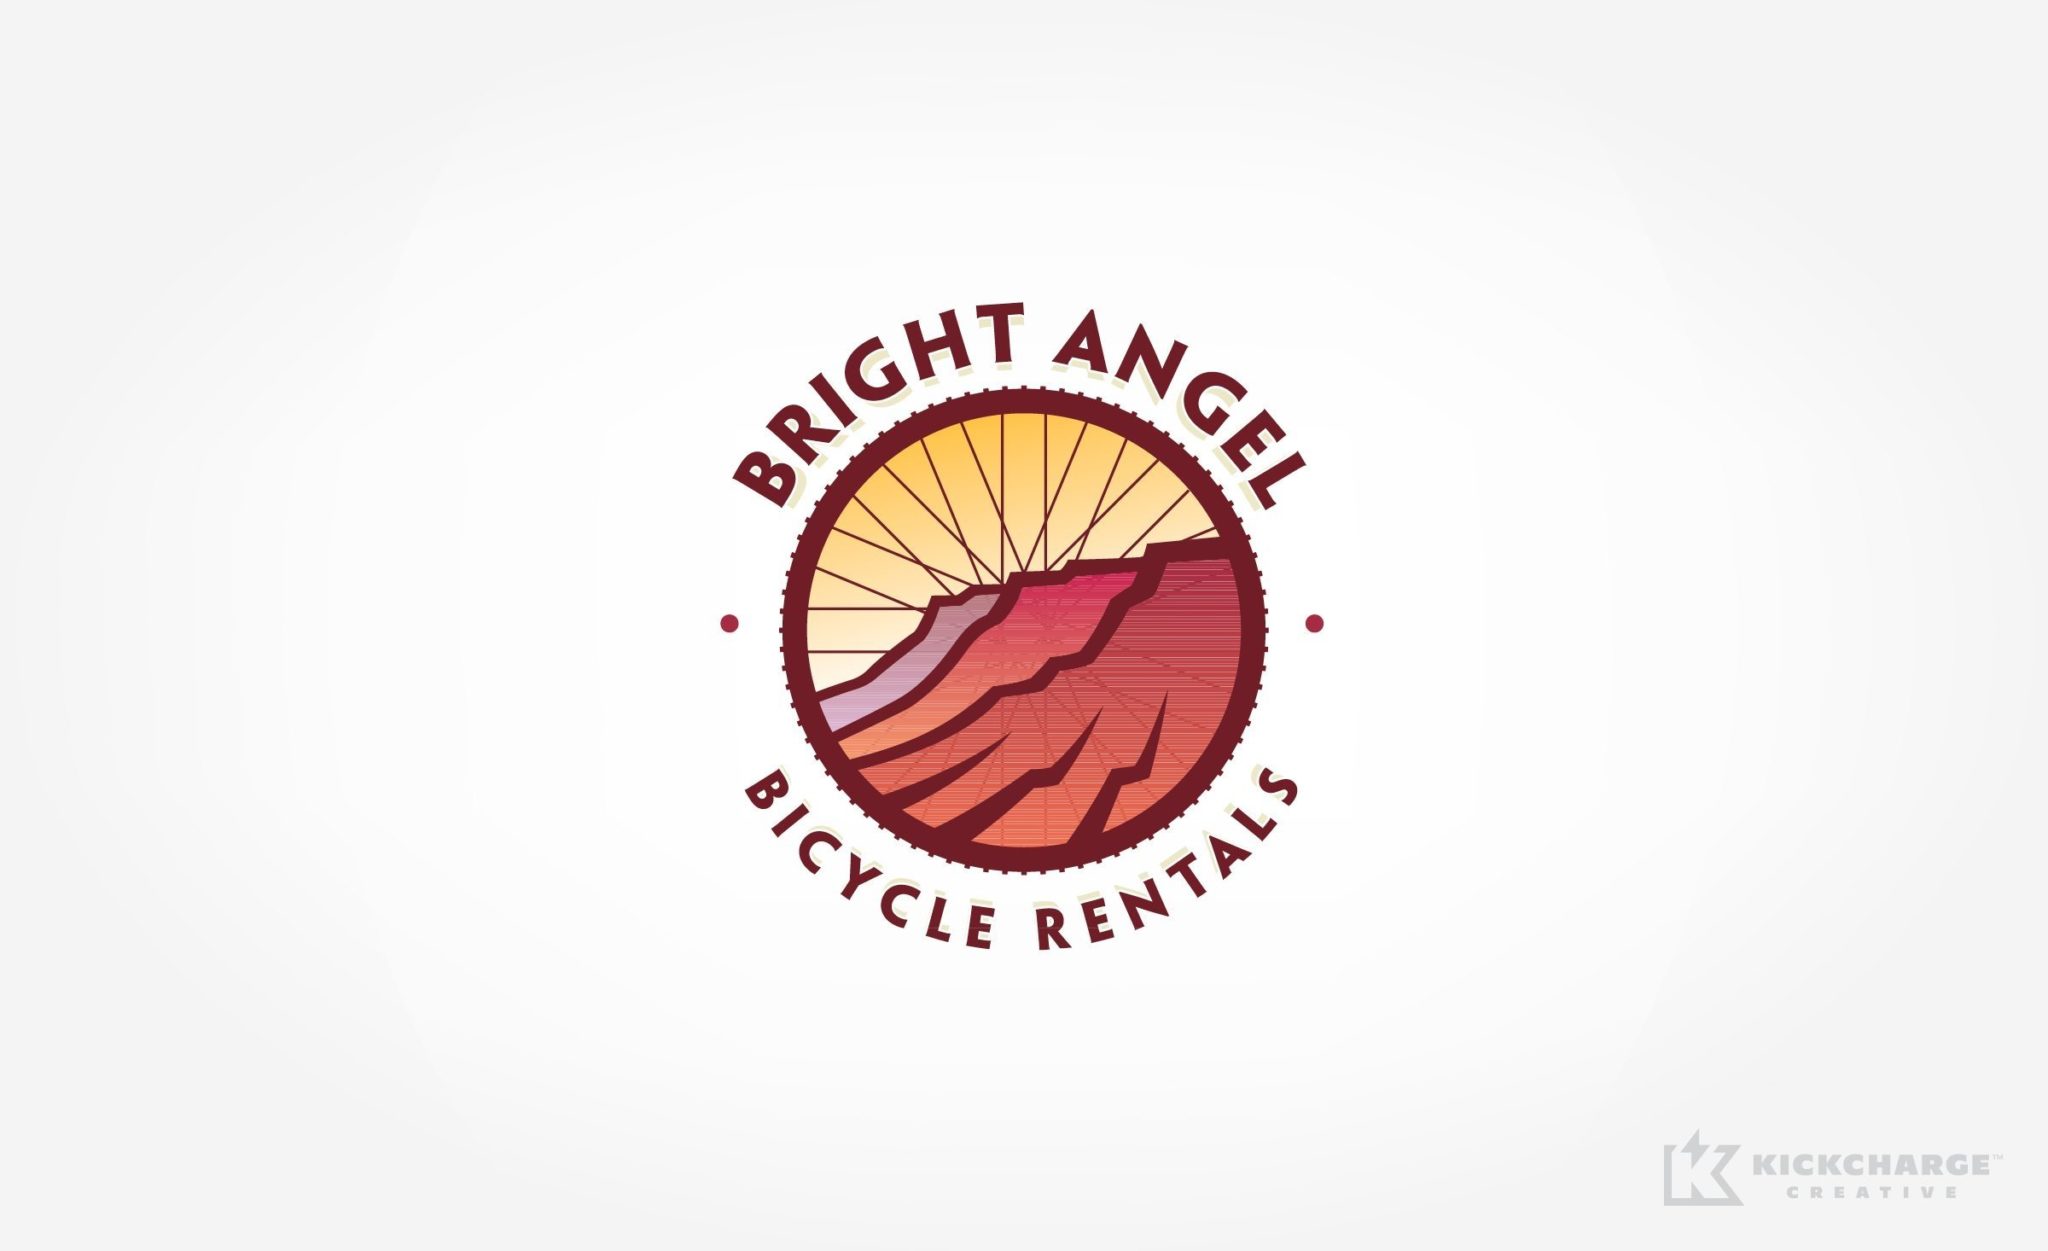 Bright Angel Bicycle Rentals